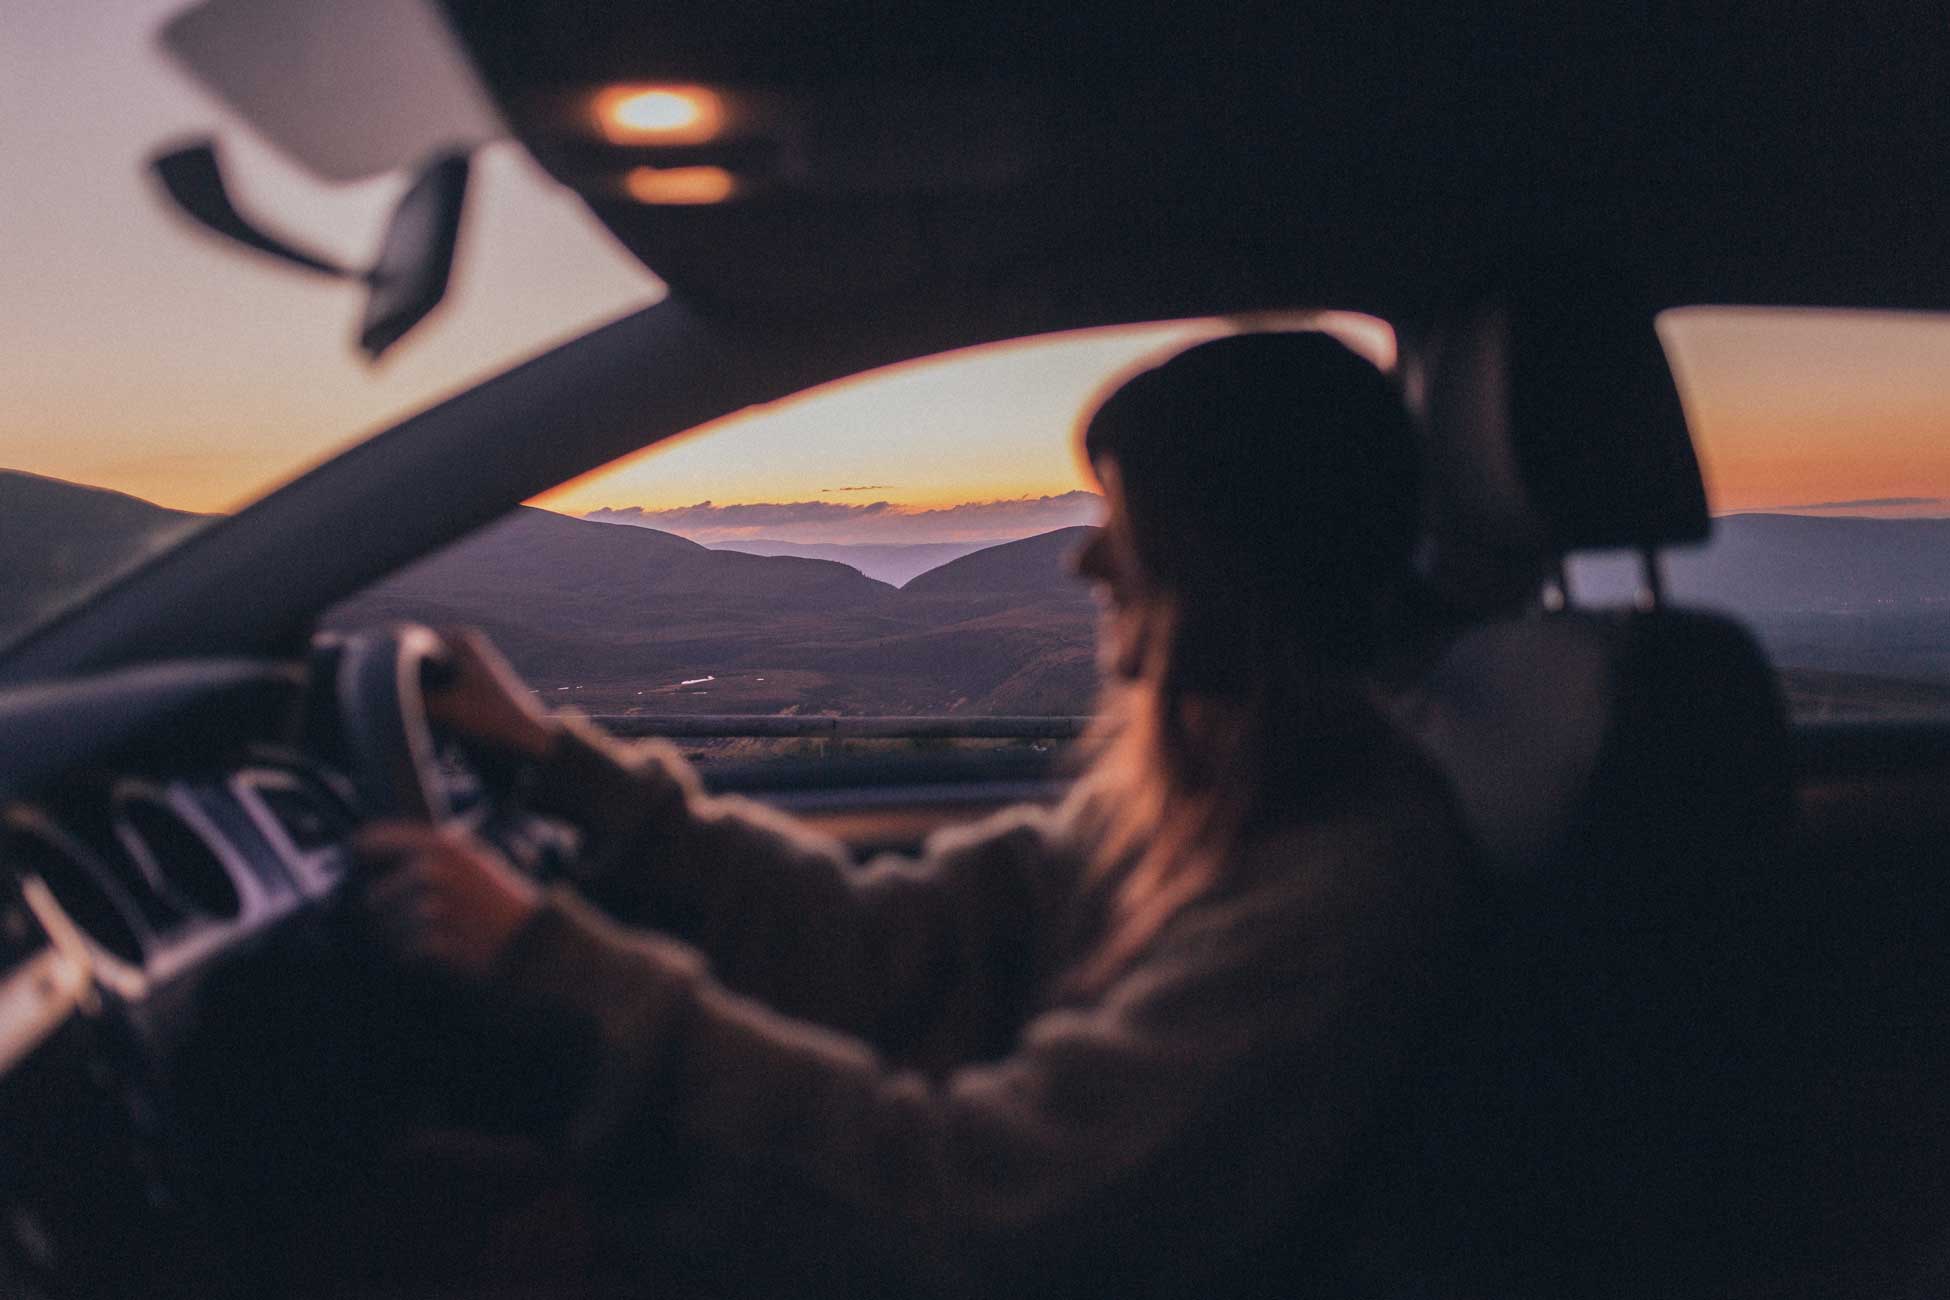 A lady driving a car